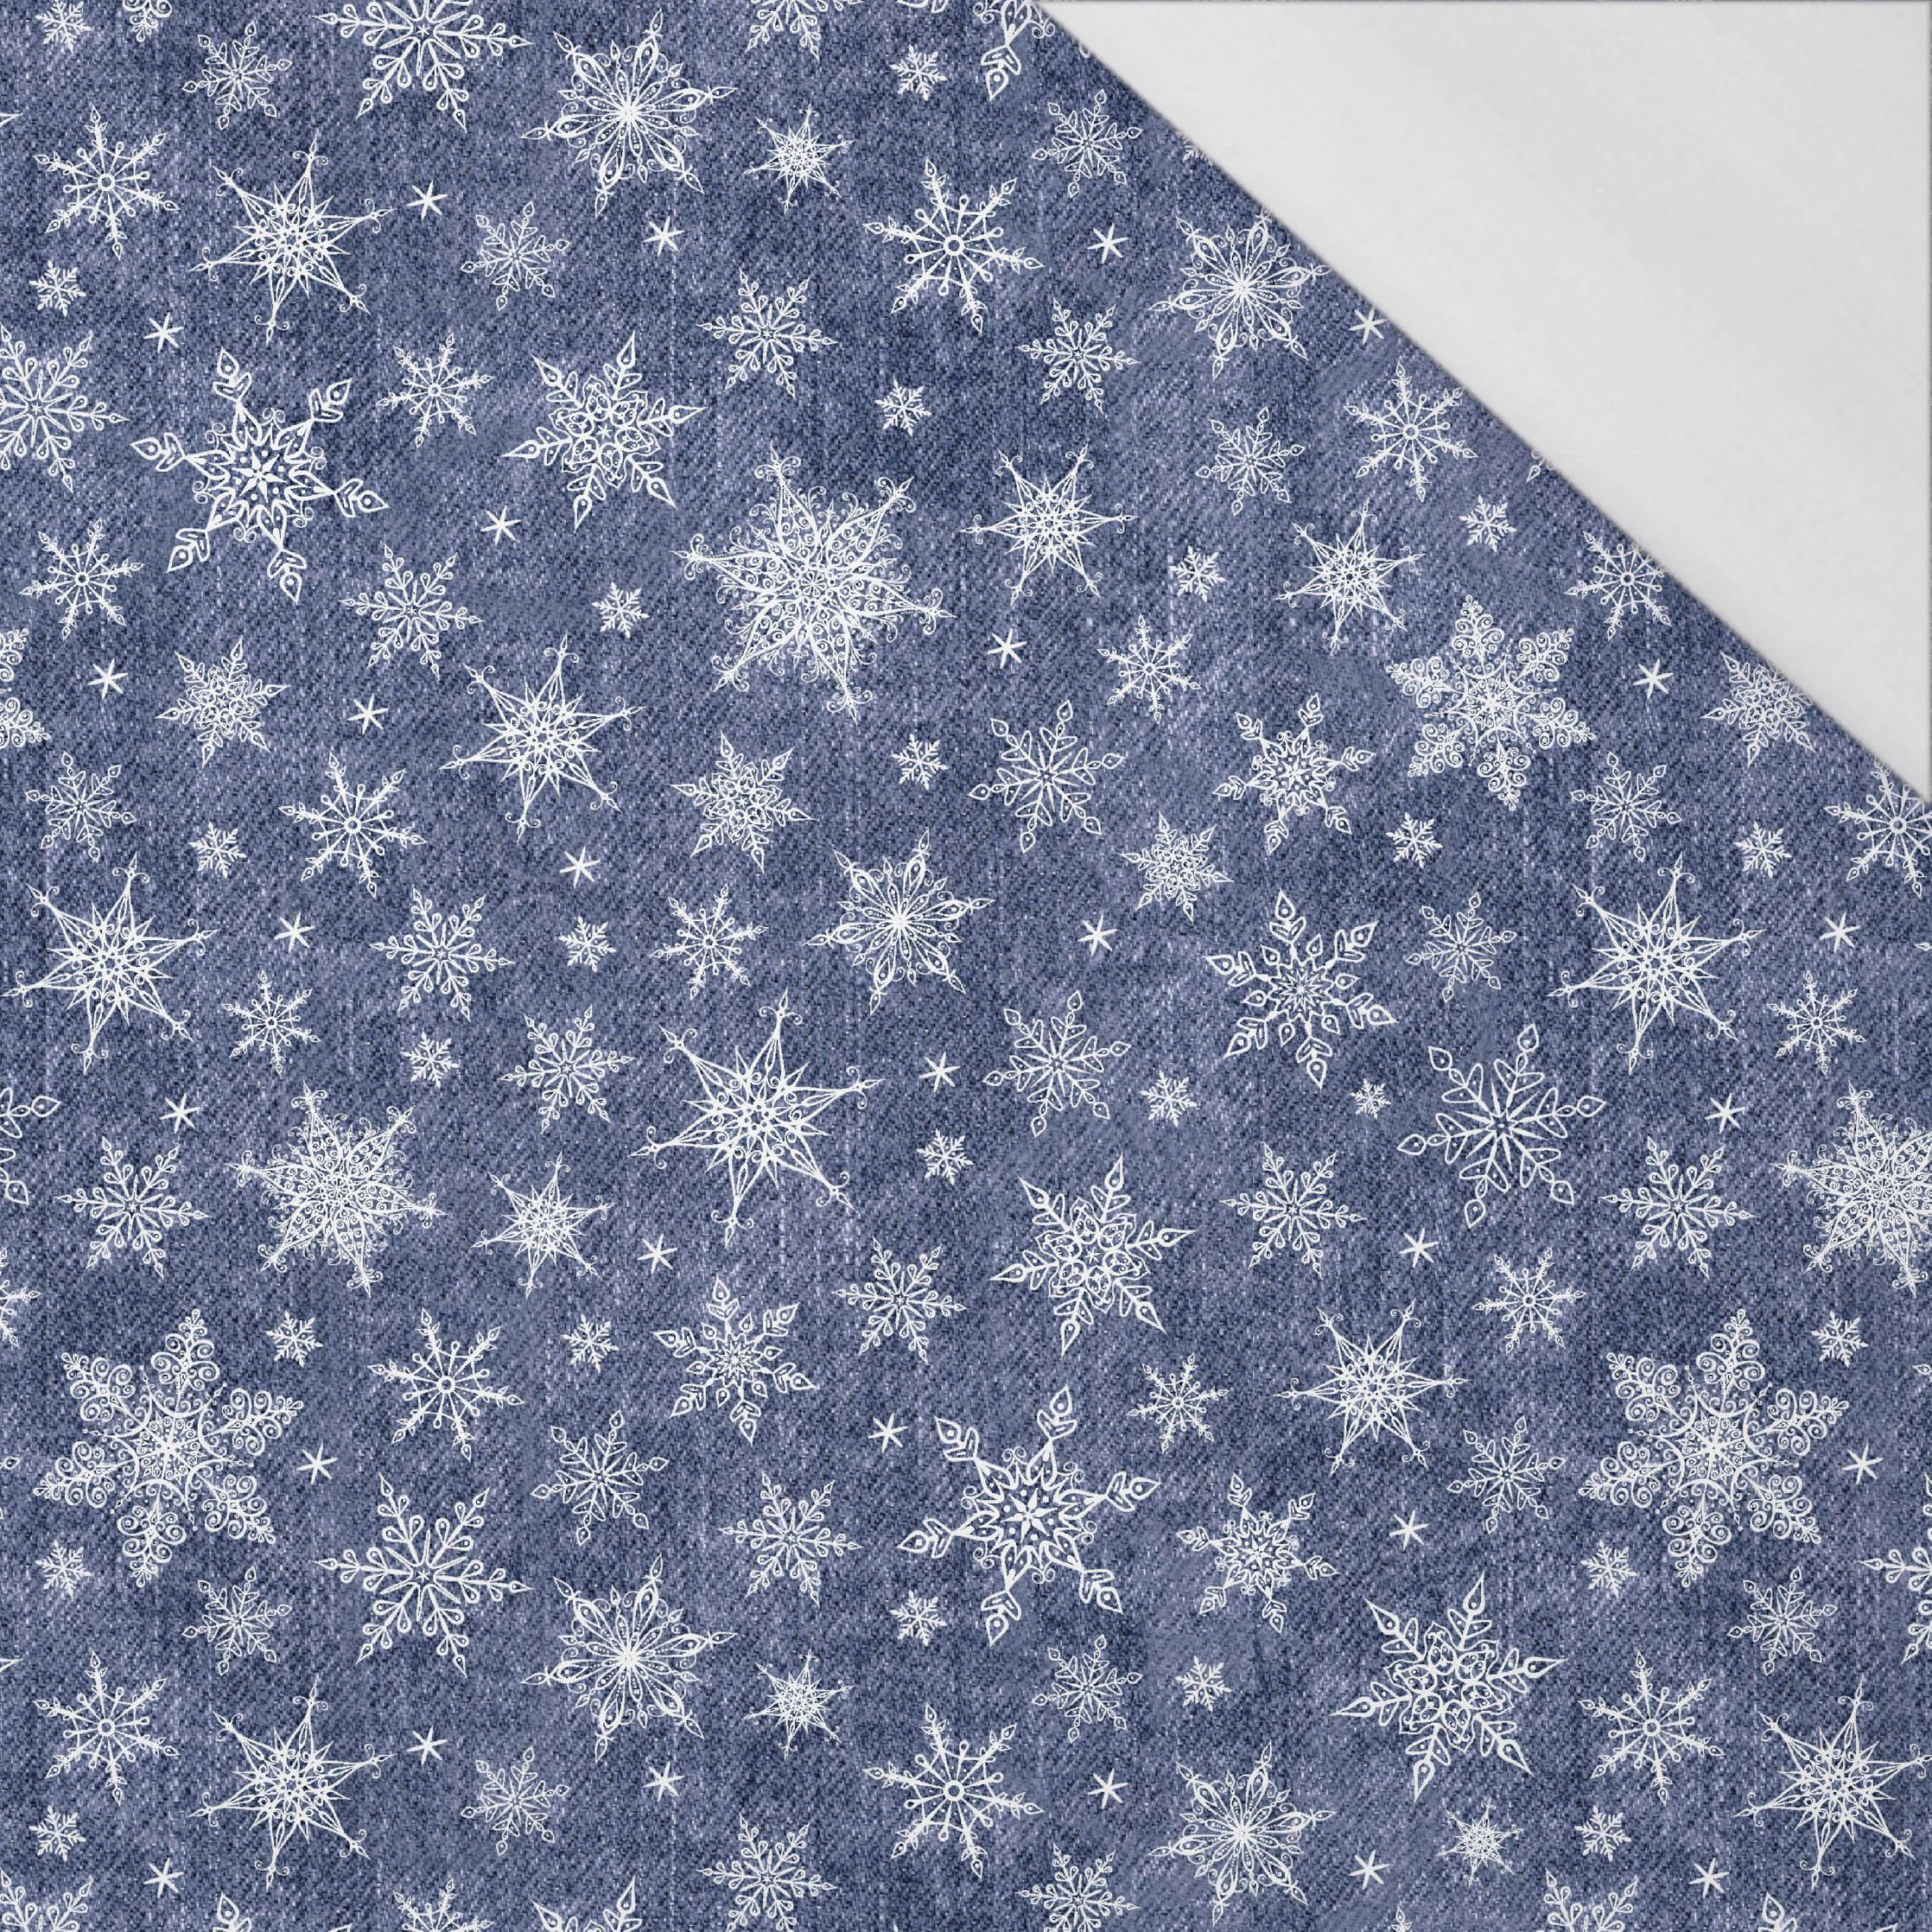 SNOWFLAKES PAT. 2 / ACID WASH DARK BLUE - single jersey with elastane 